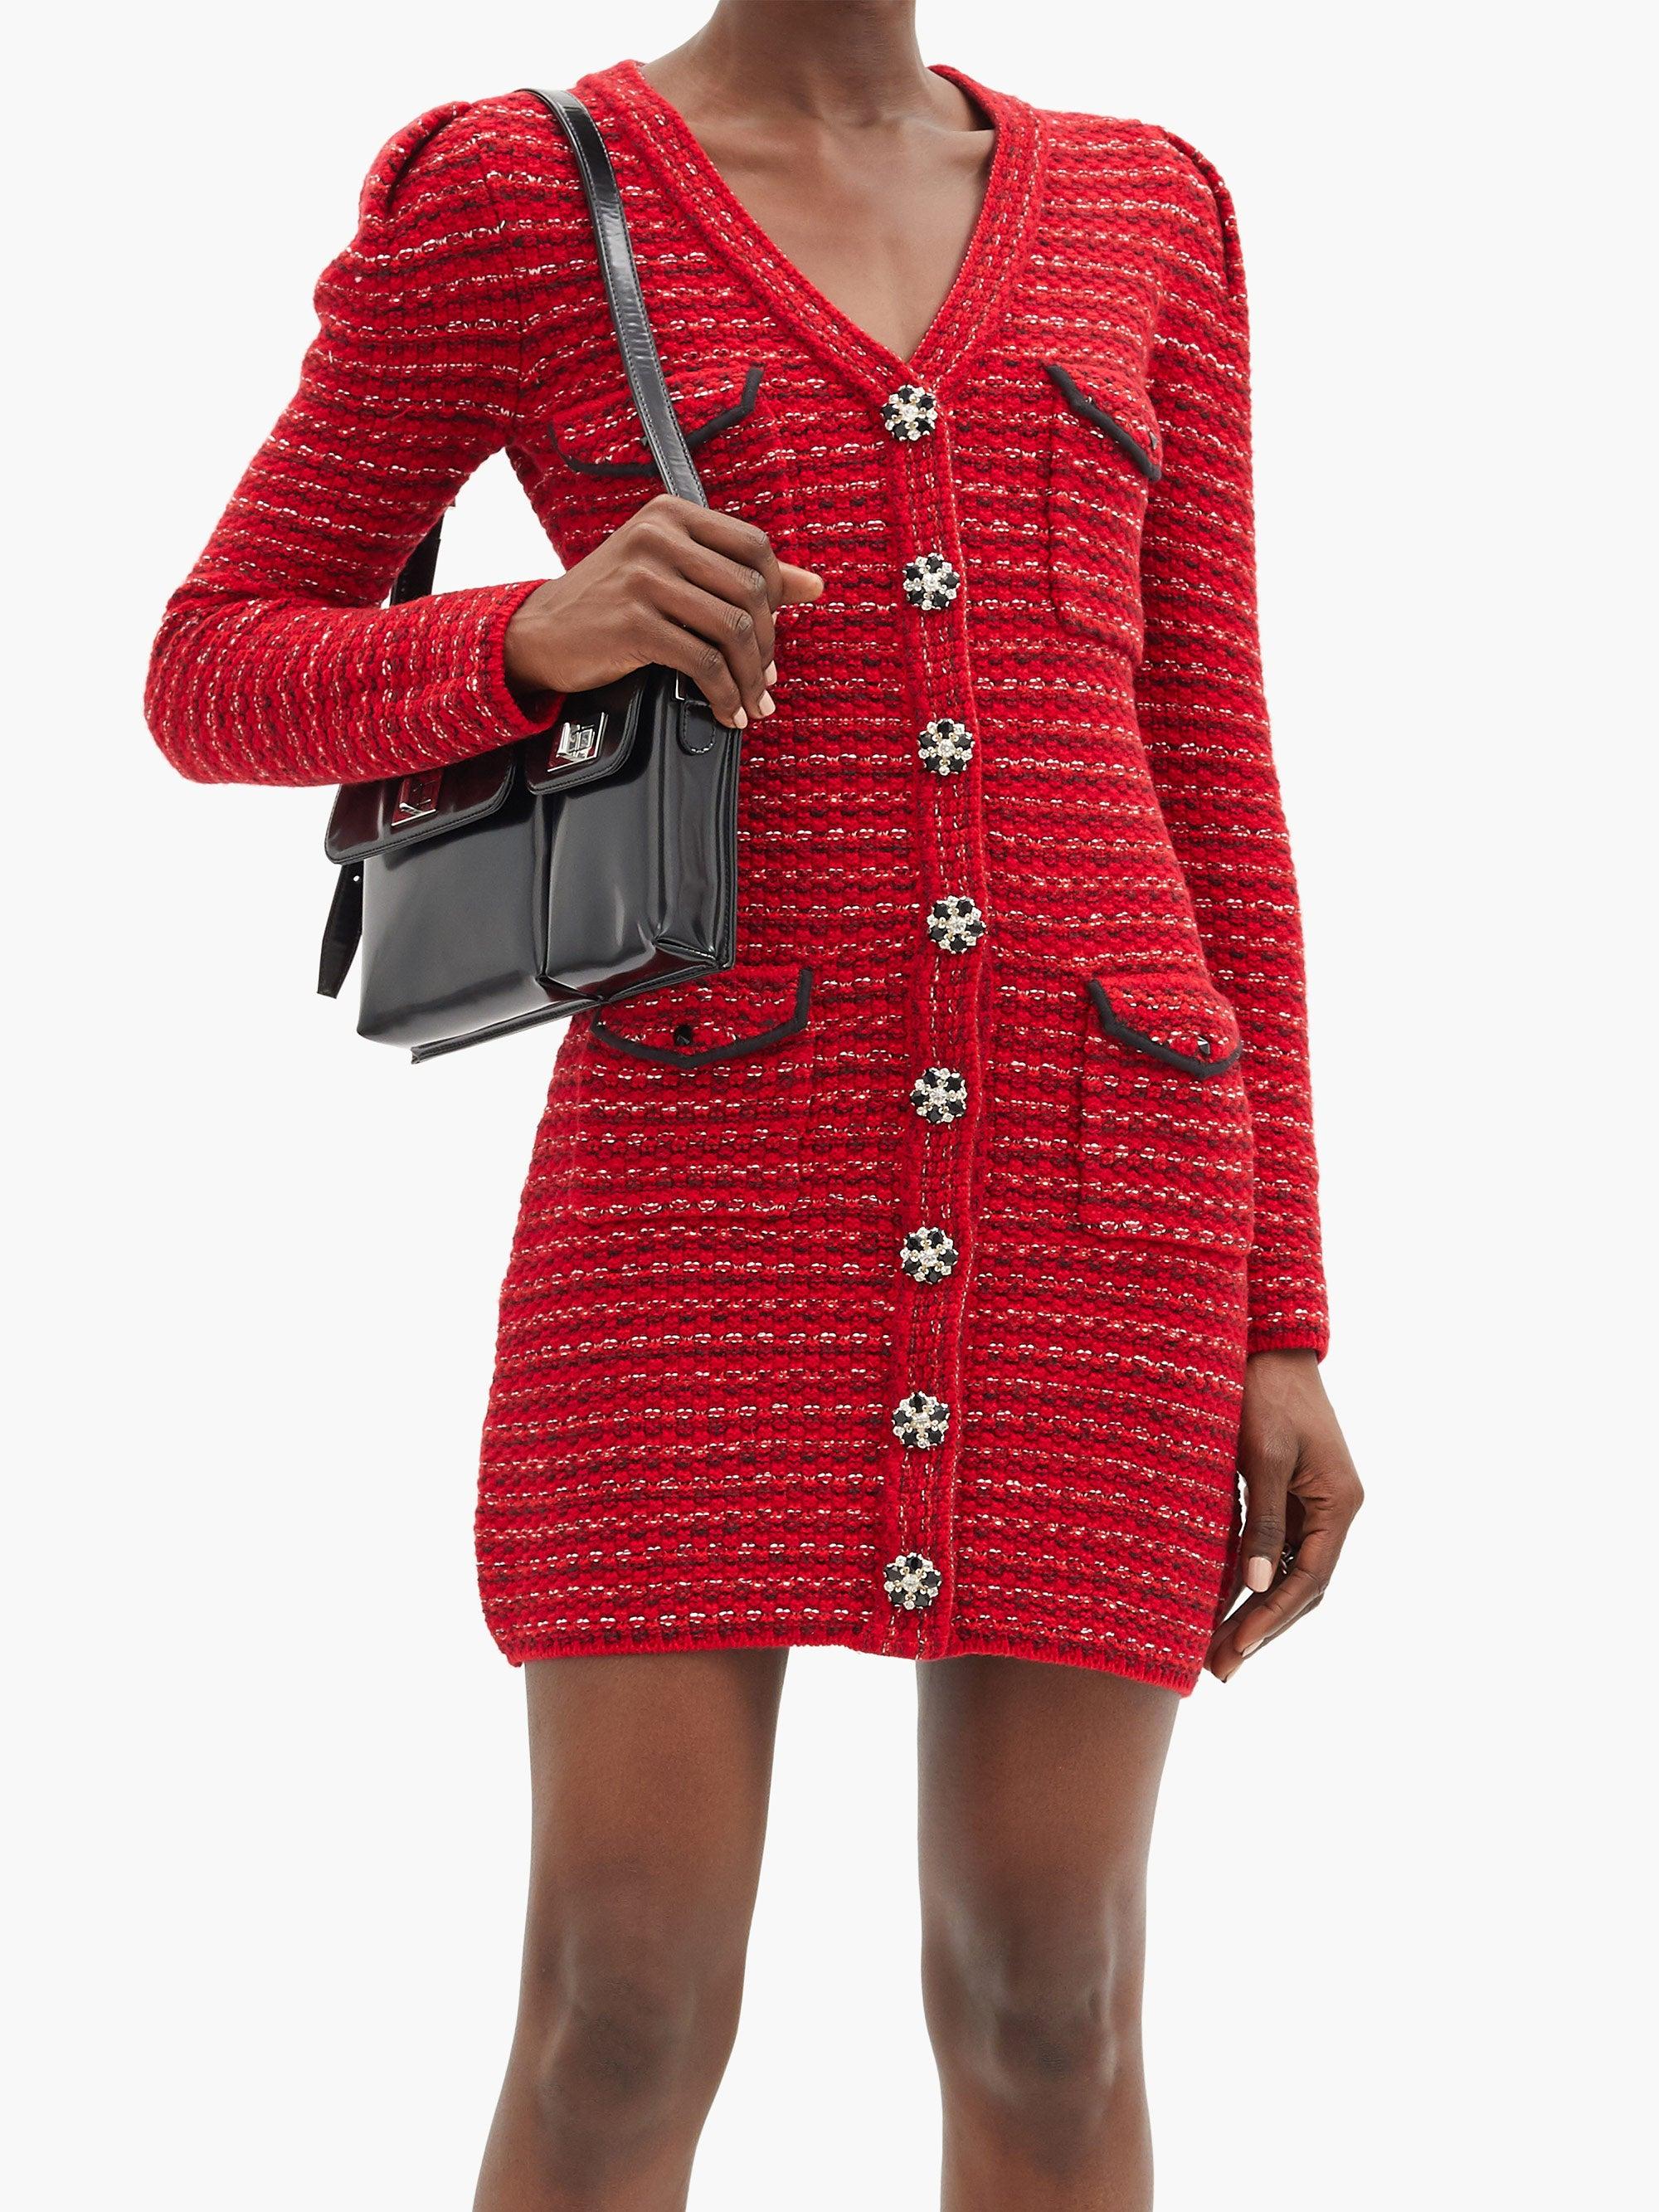 tweed red dress Big sale - OFF 75%